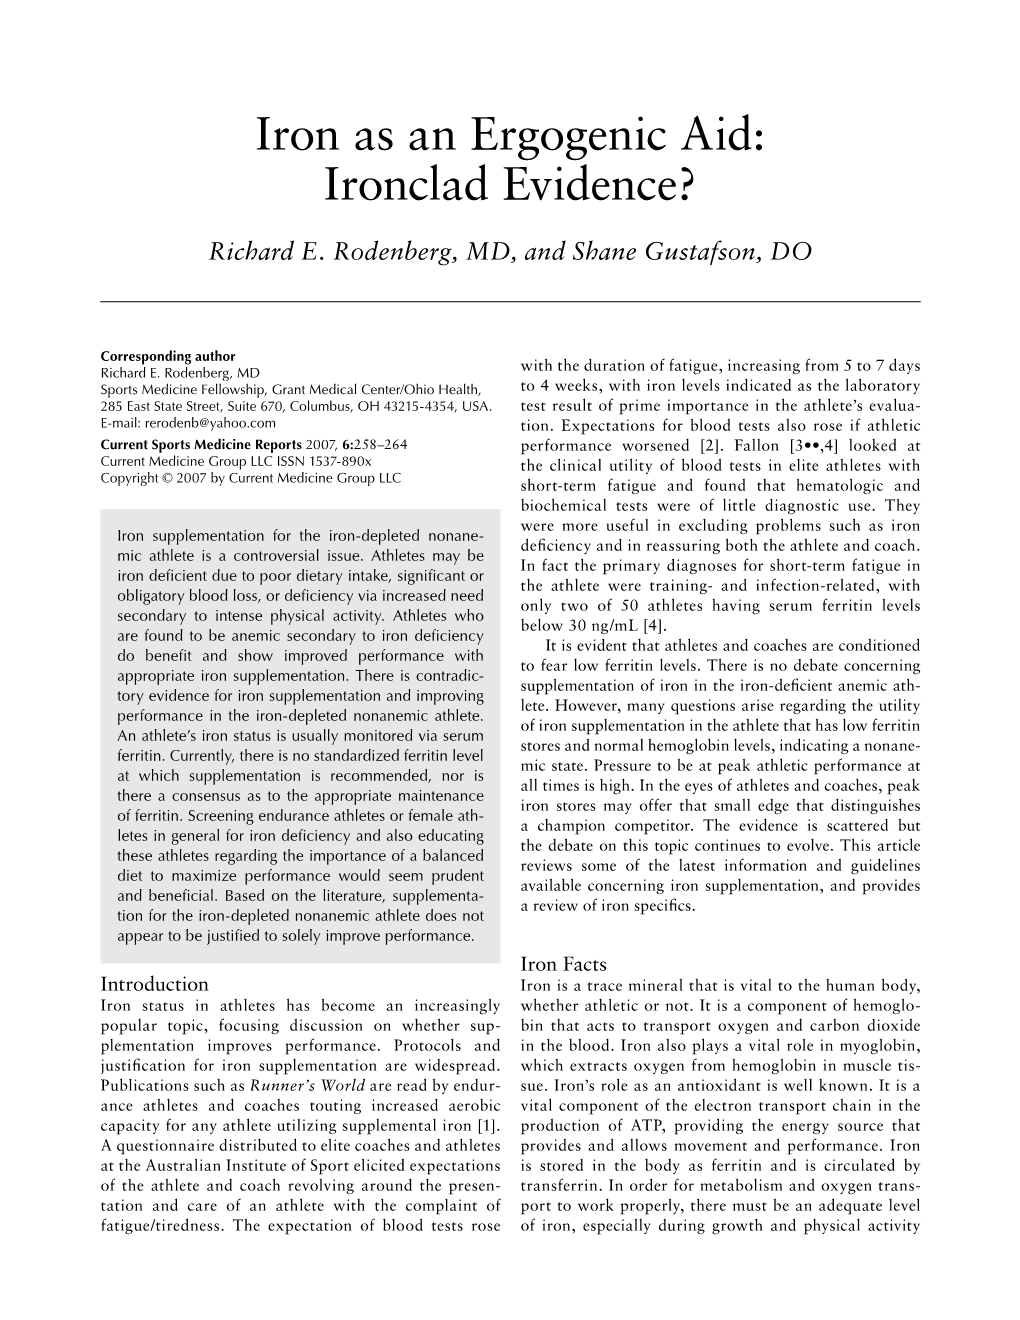 Iron As an Ergogenic Aid: Ironclad Evidence?